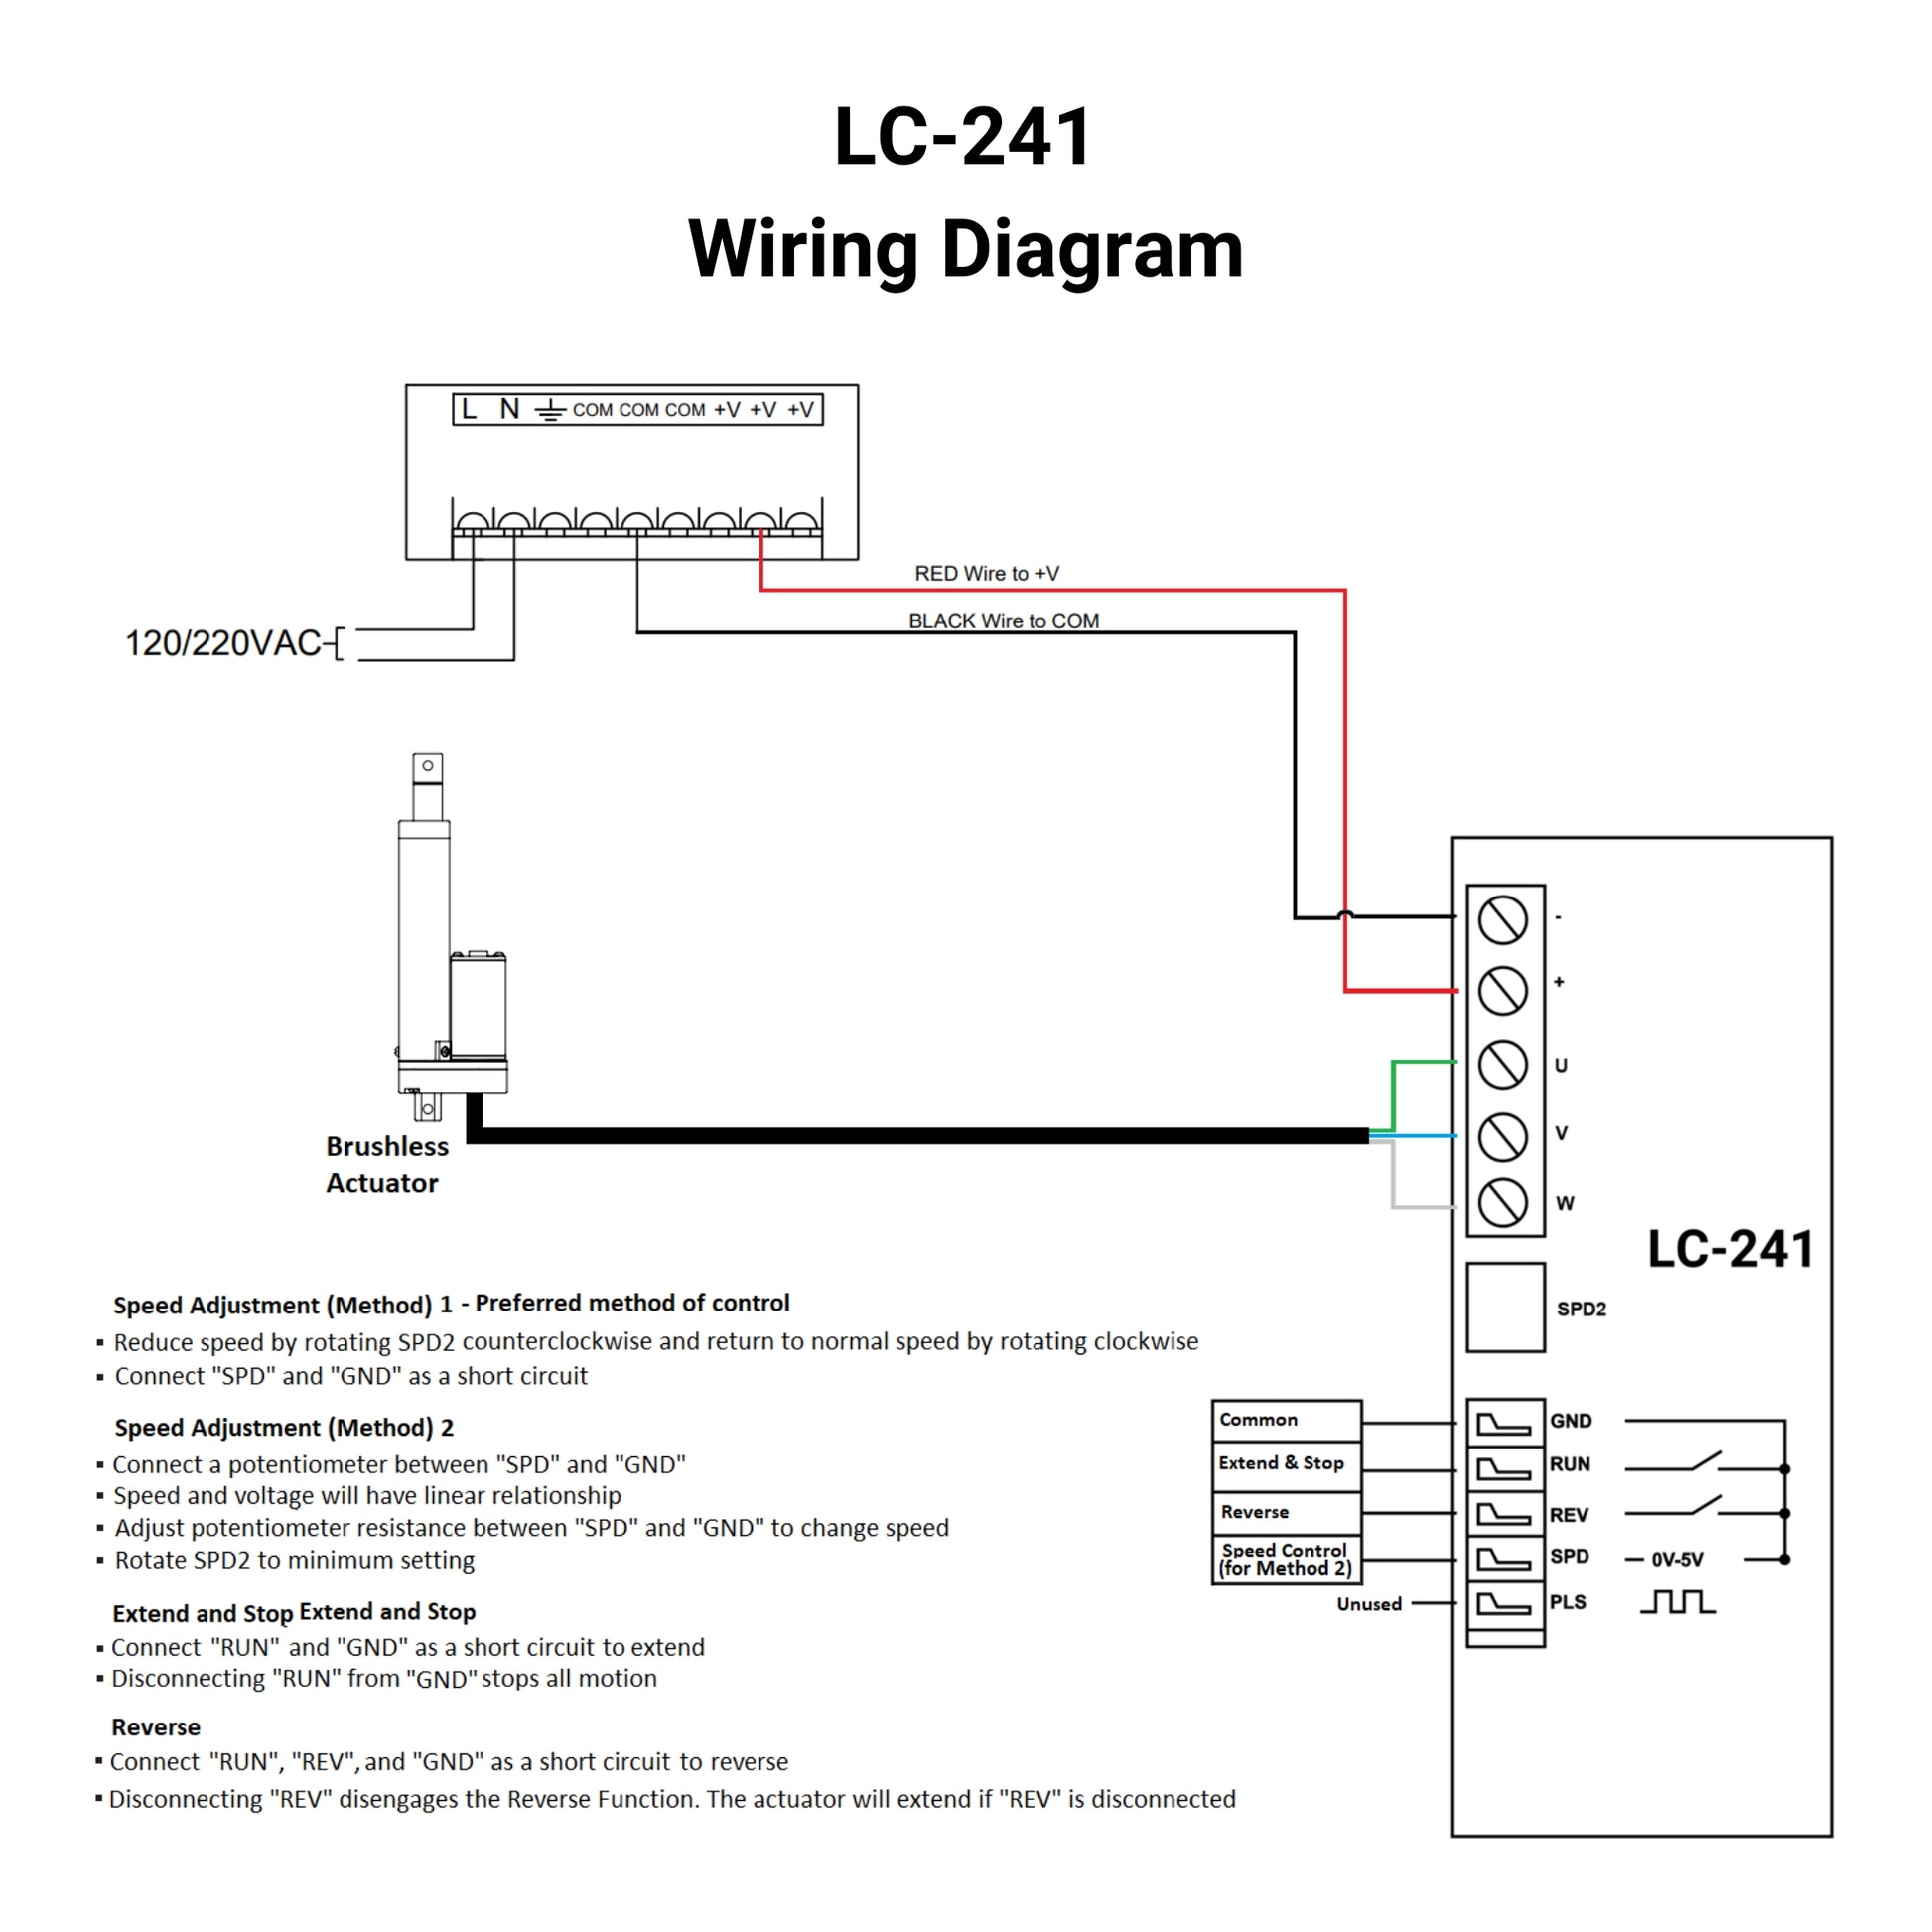 LC-241 brushless DC motor controller wiring diagram, pin out diagram